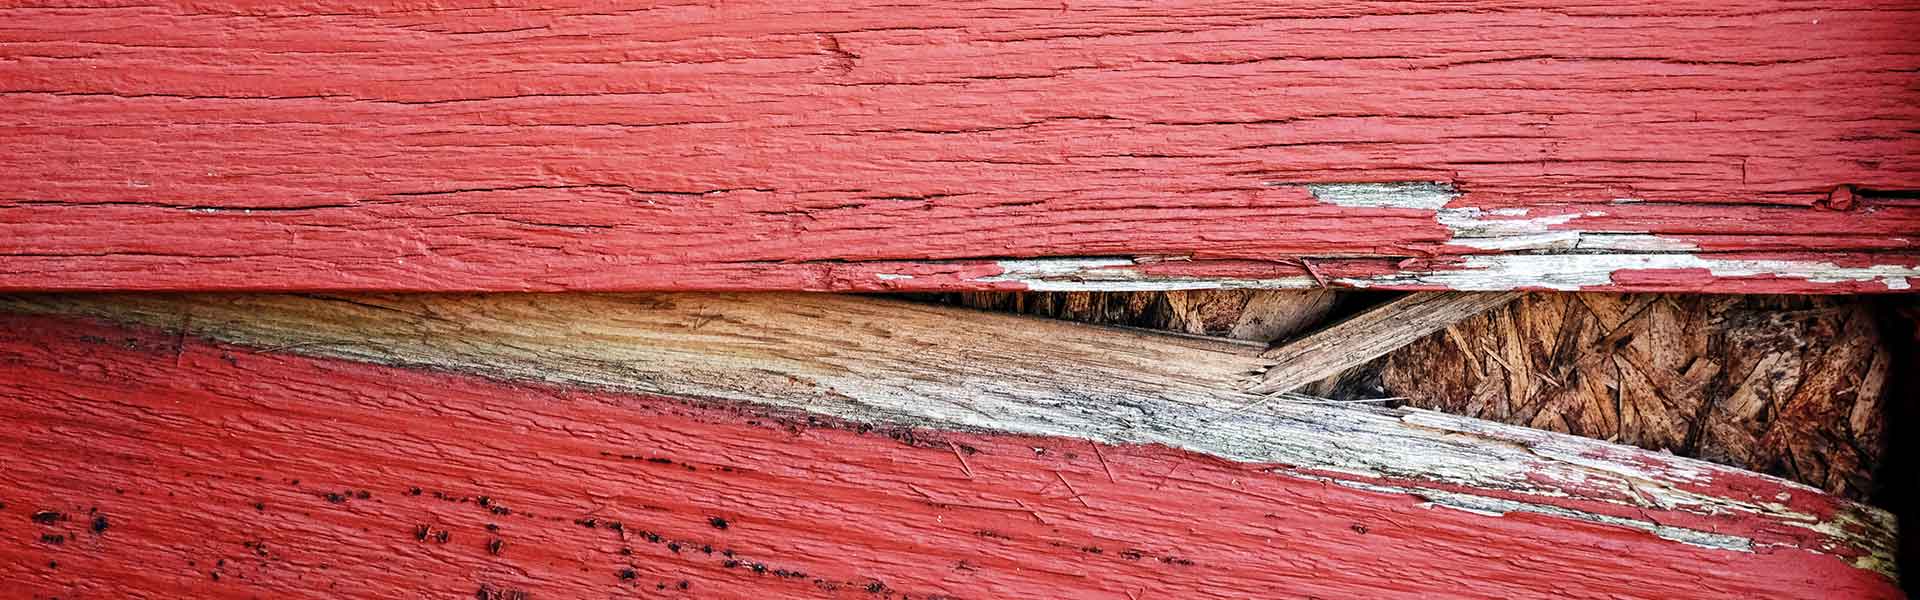 red wood siding rotting